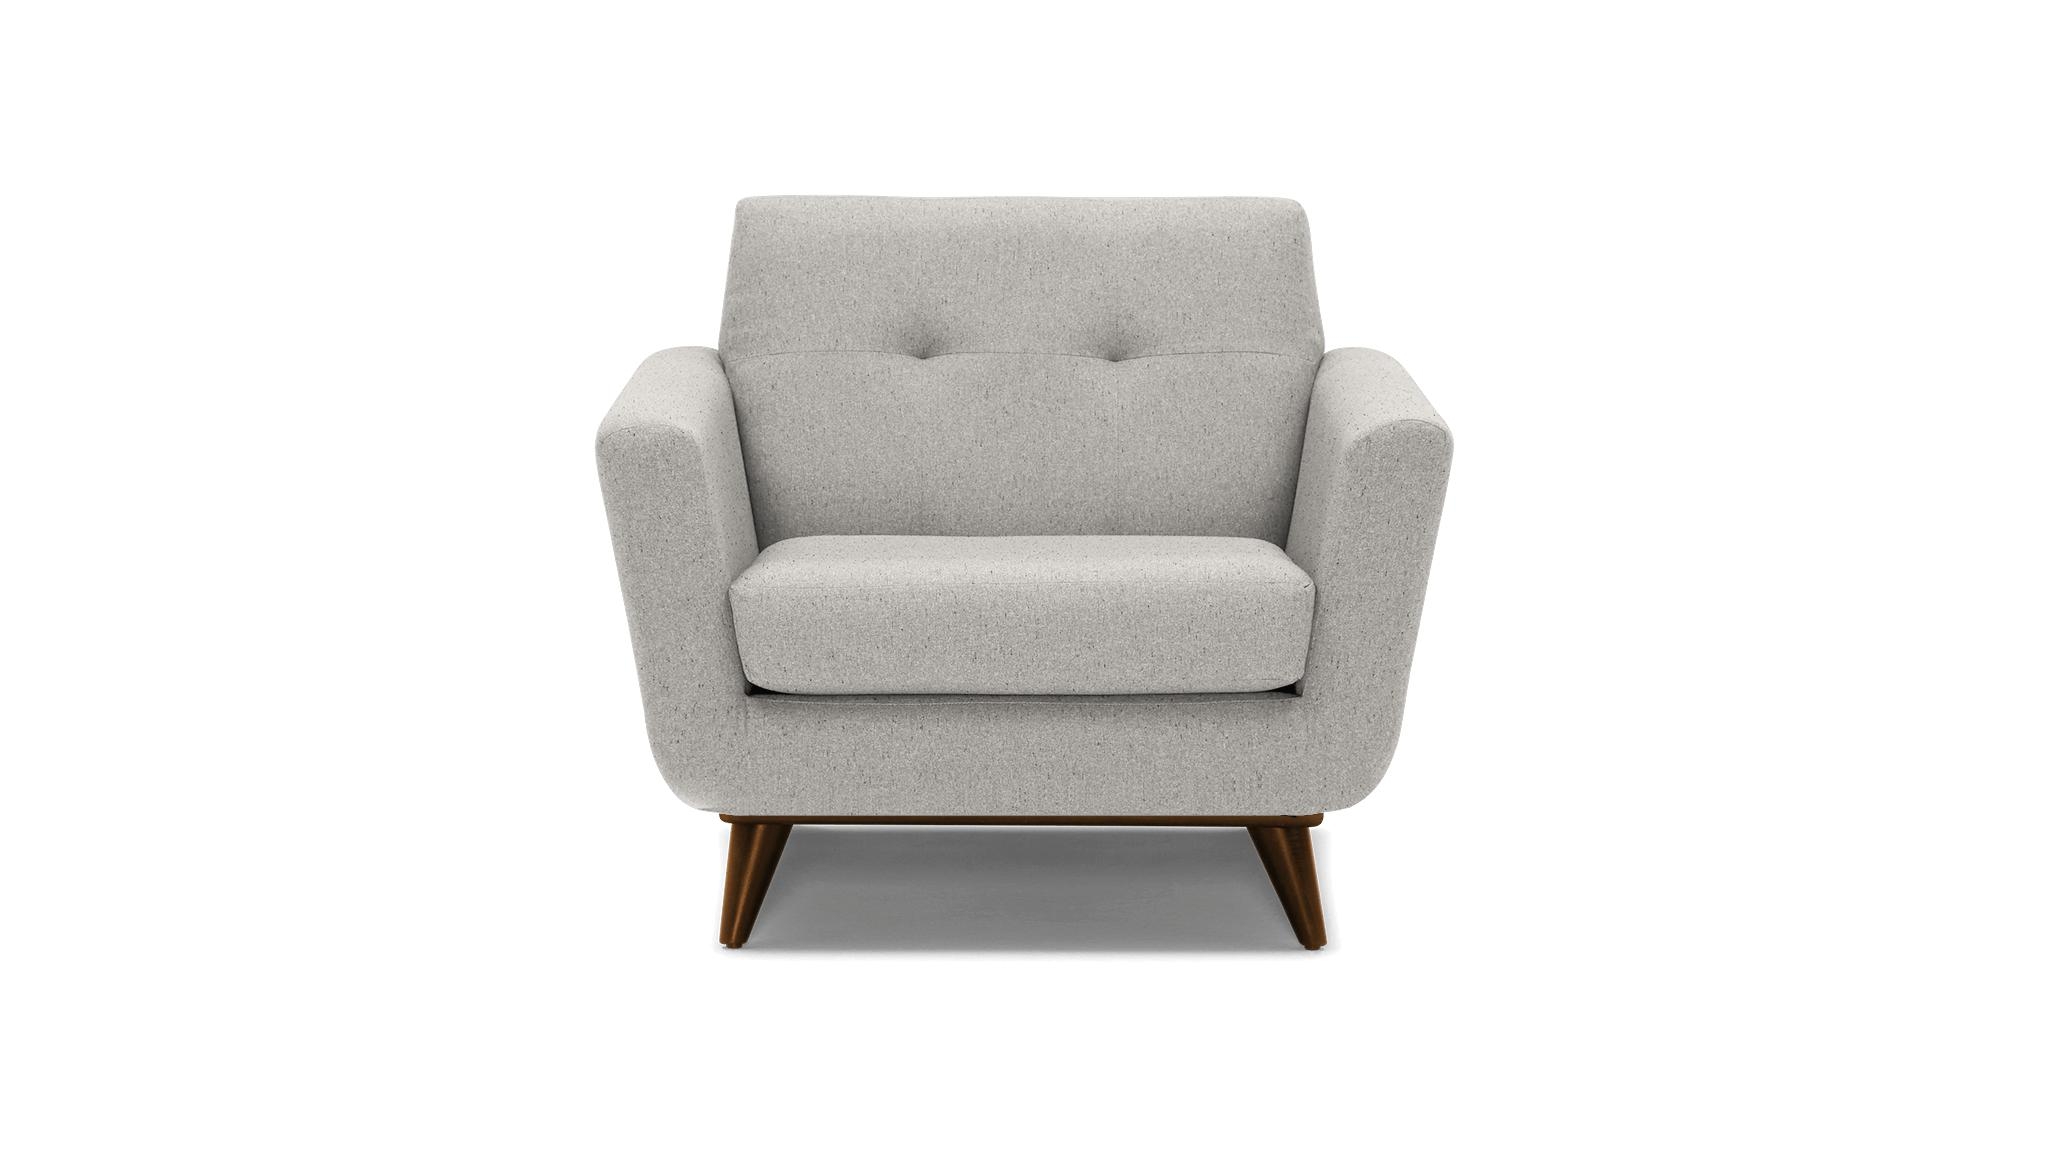 White Hughes Mid Century Modern Chair - Tussah Snow - Mocha - Image 0